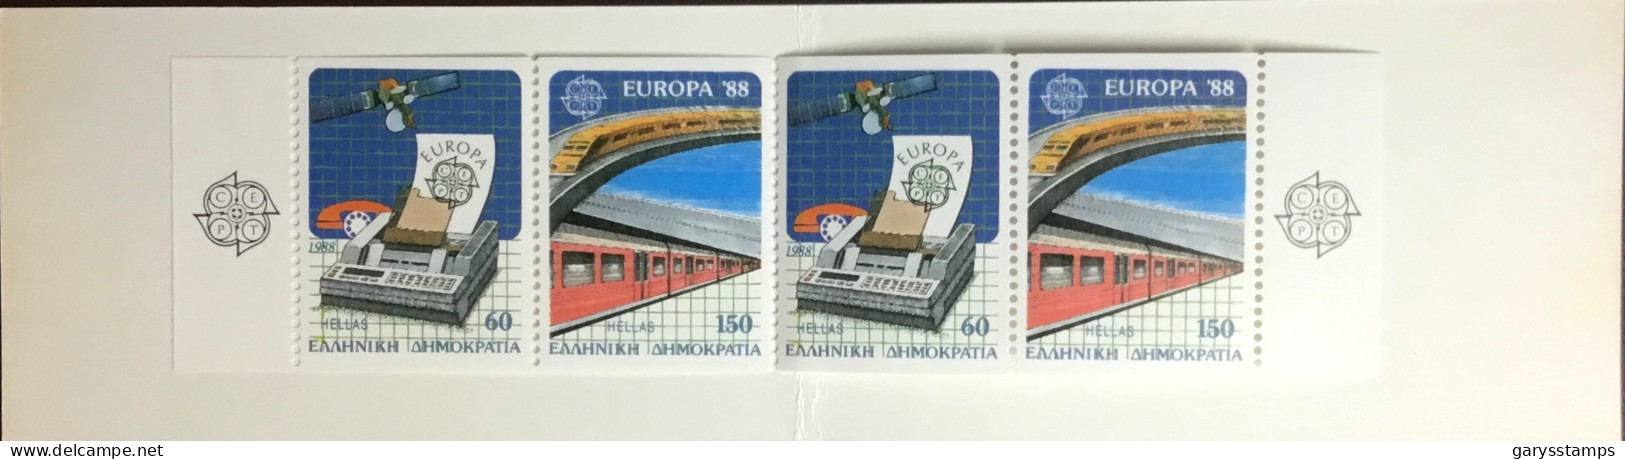 Greece 1988 Europa Booklet Unused - Booklets